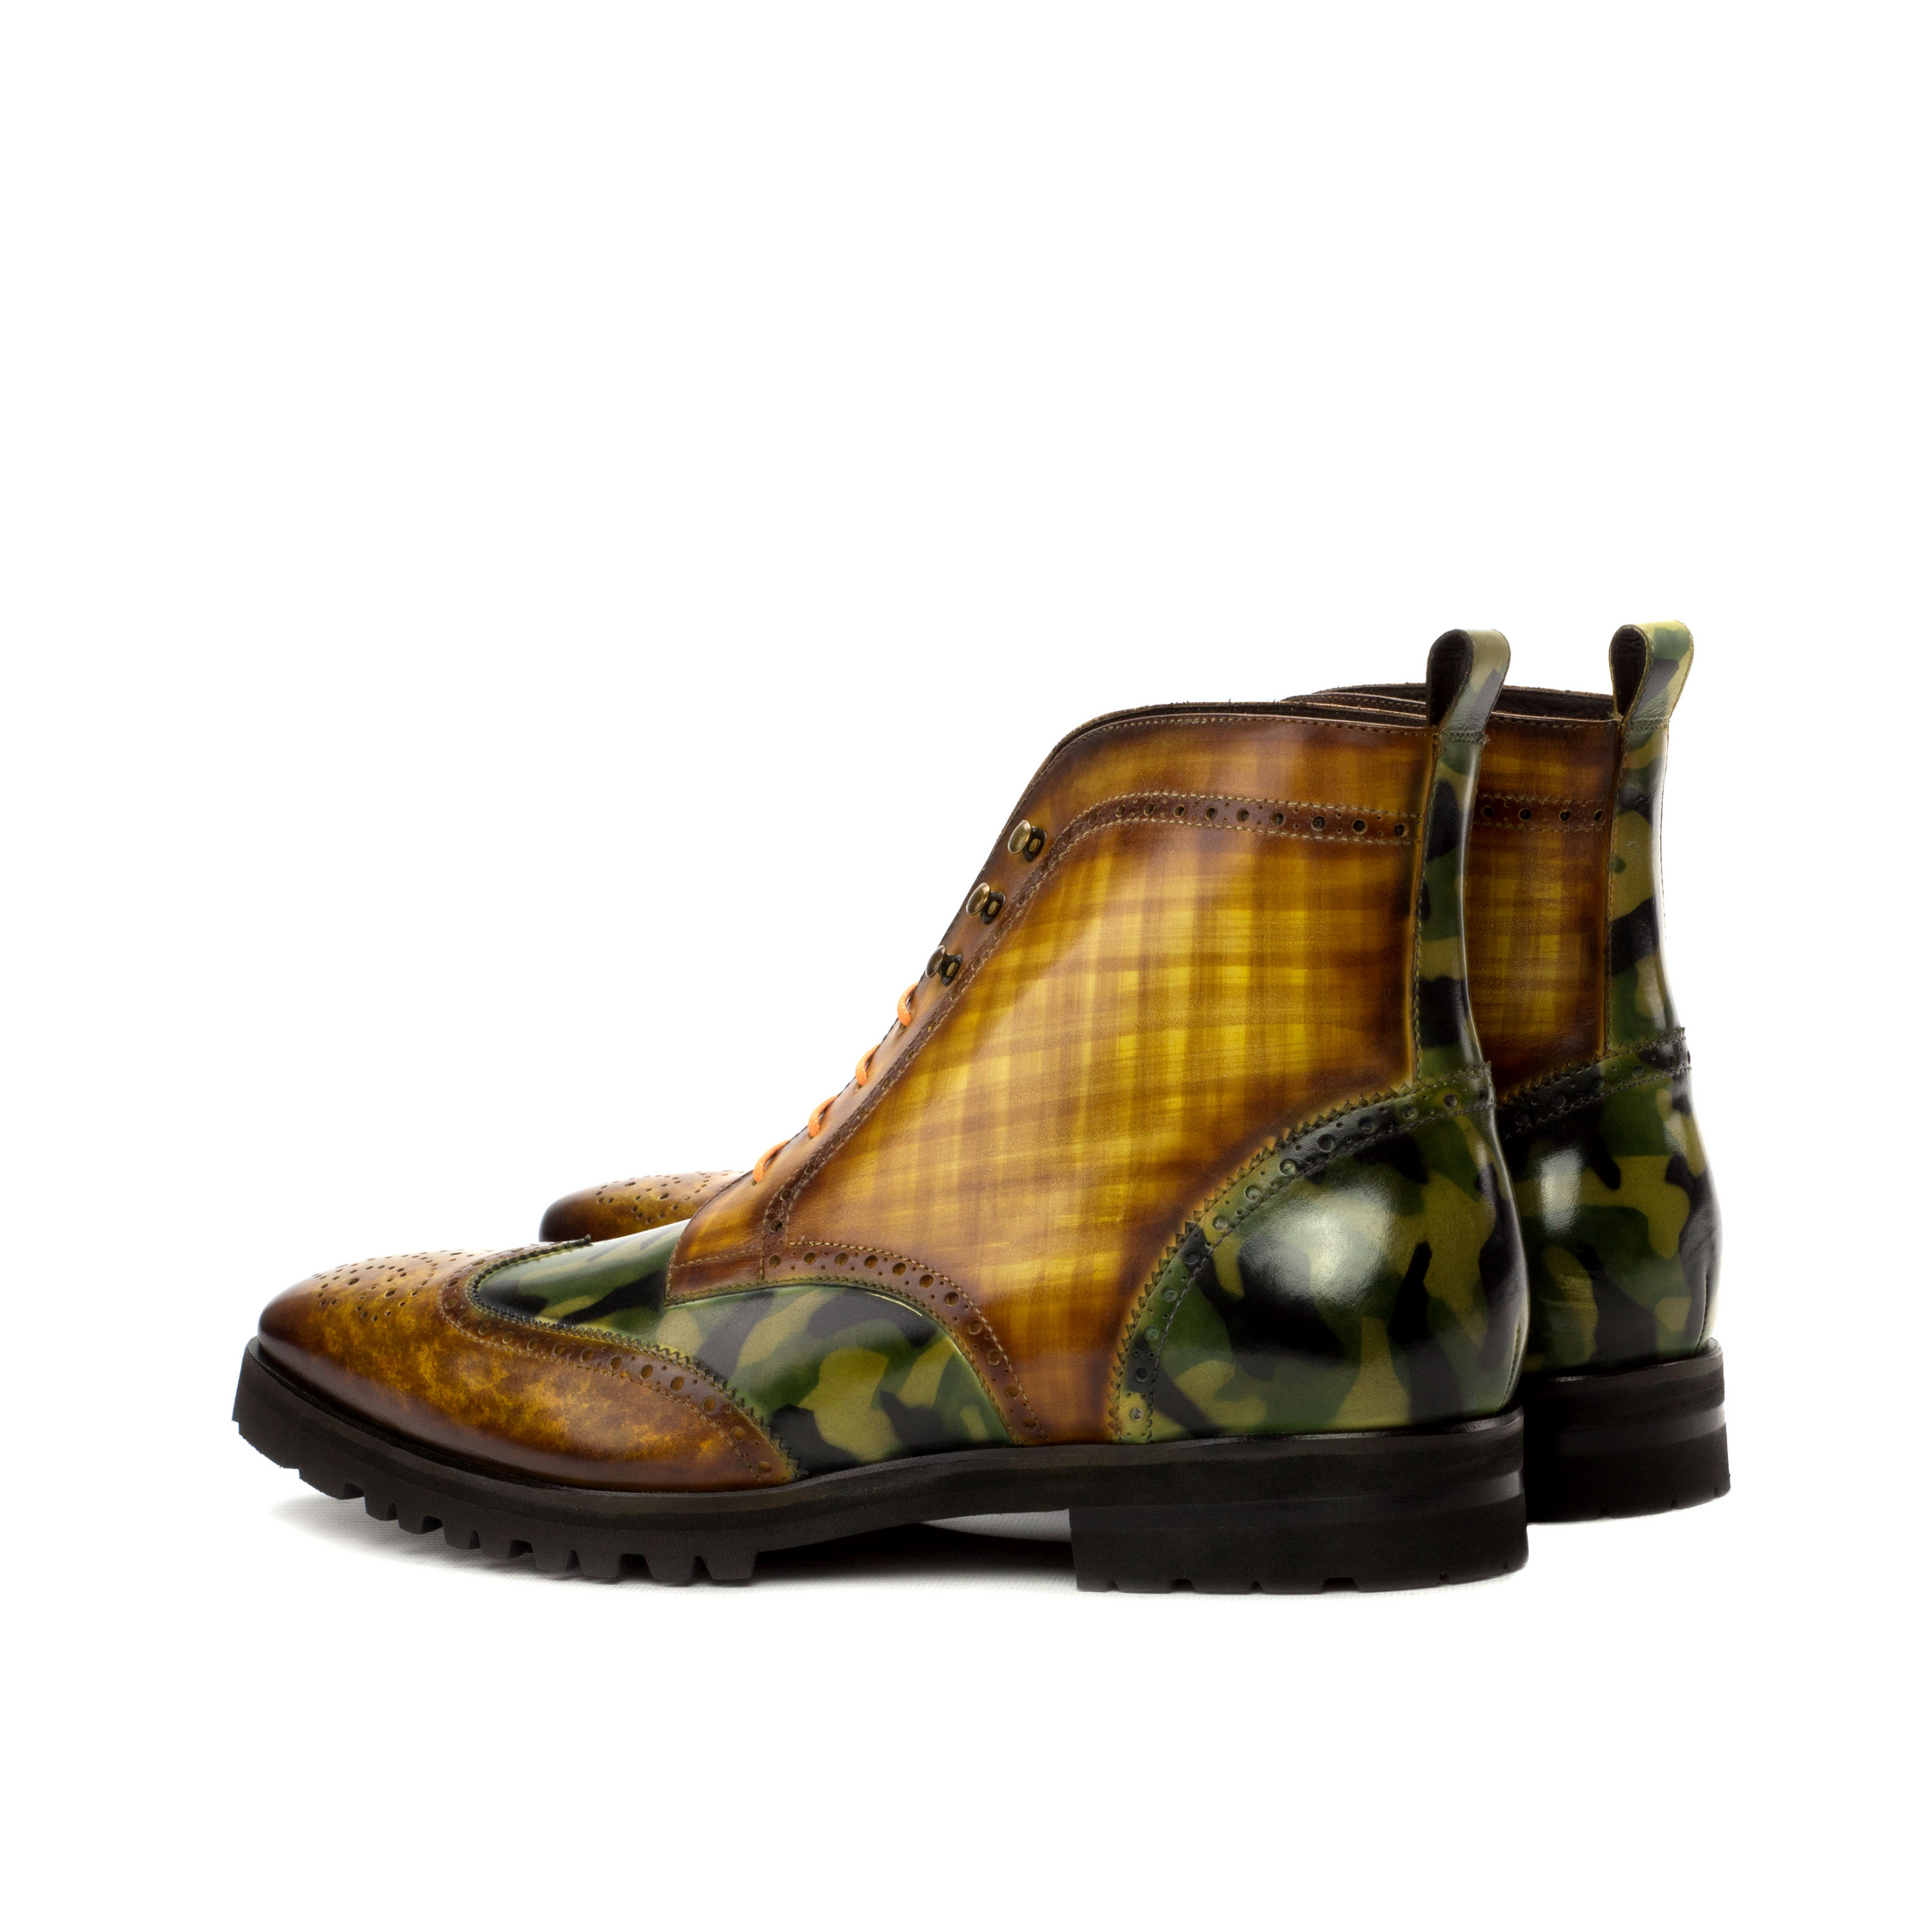 Goodlife Military Brogue Boots